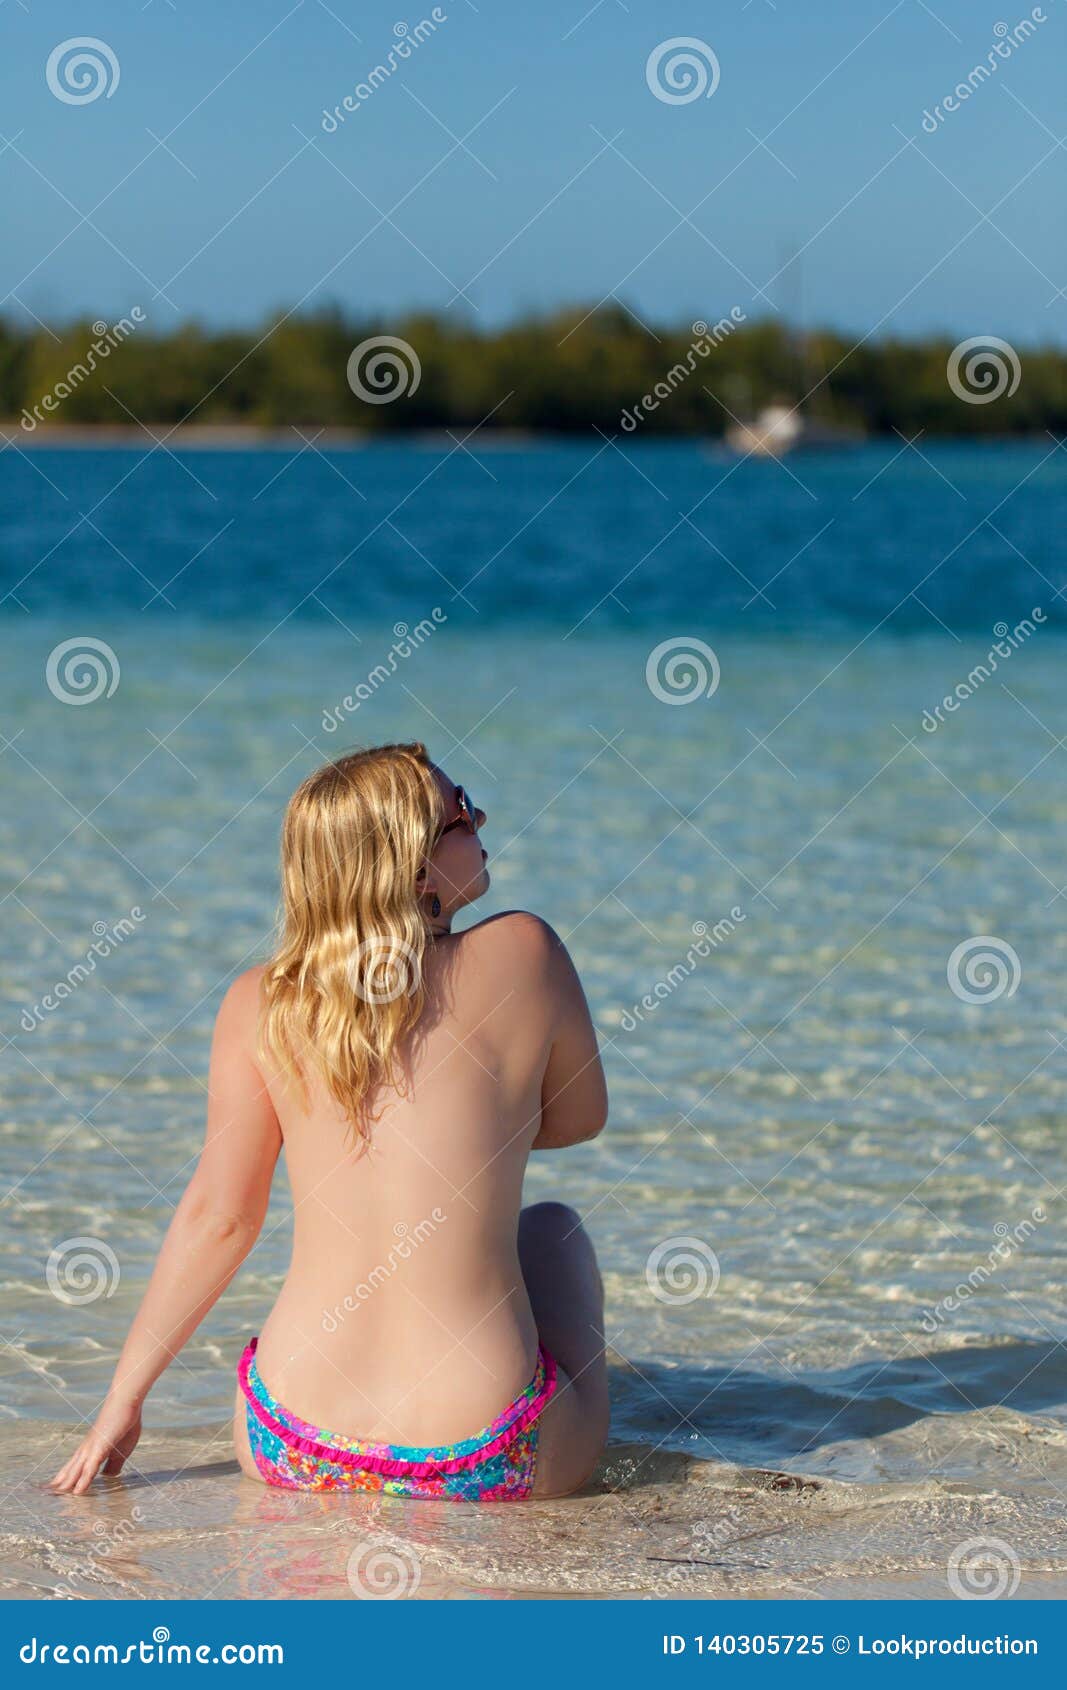 young teen nudist beach